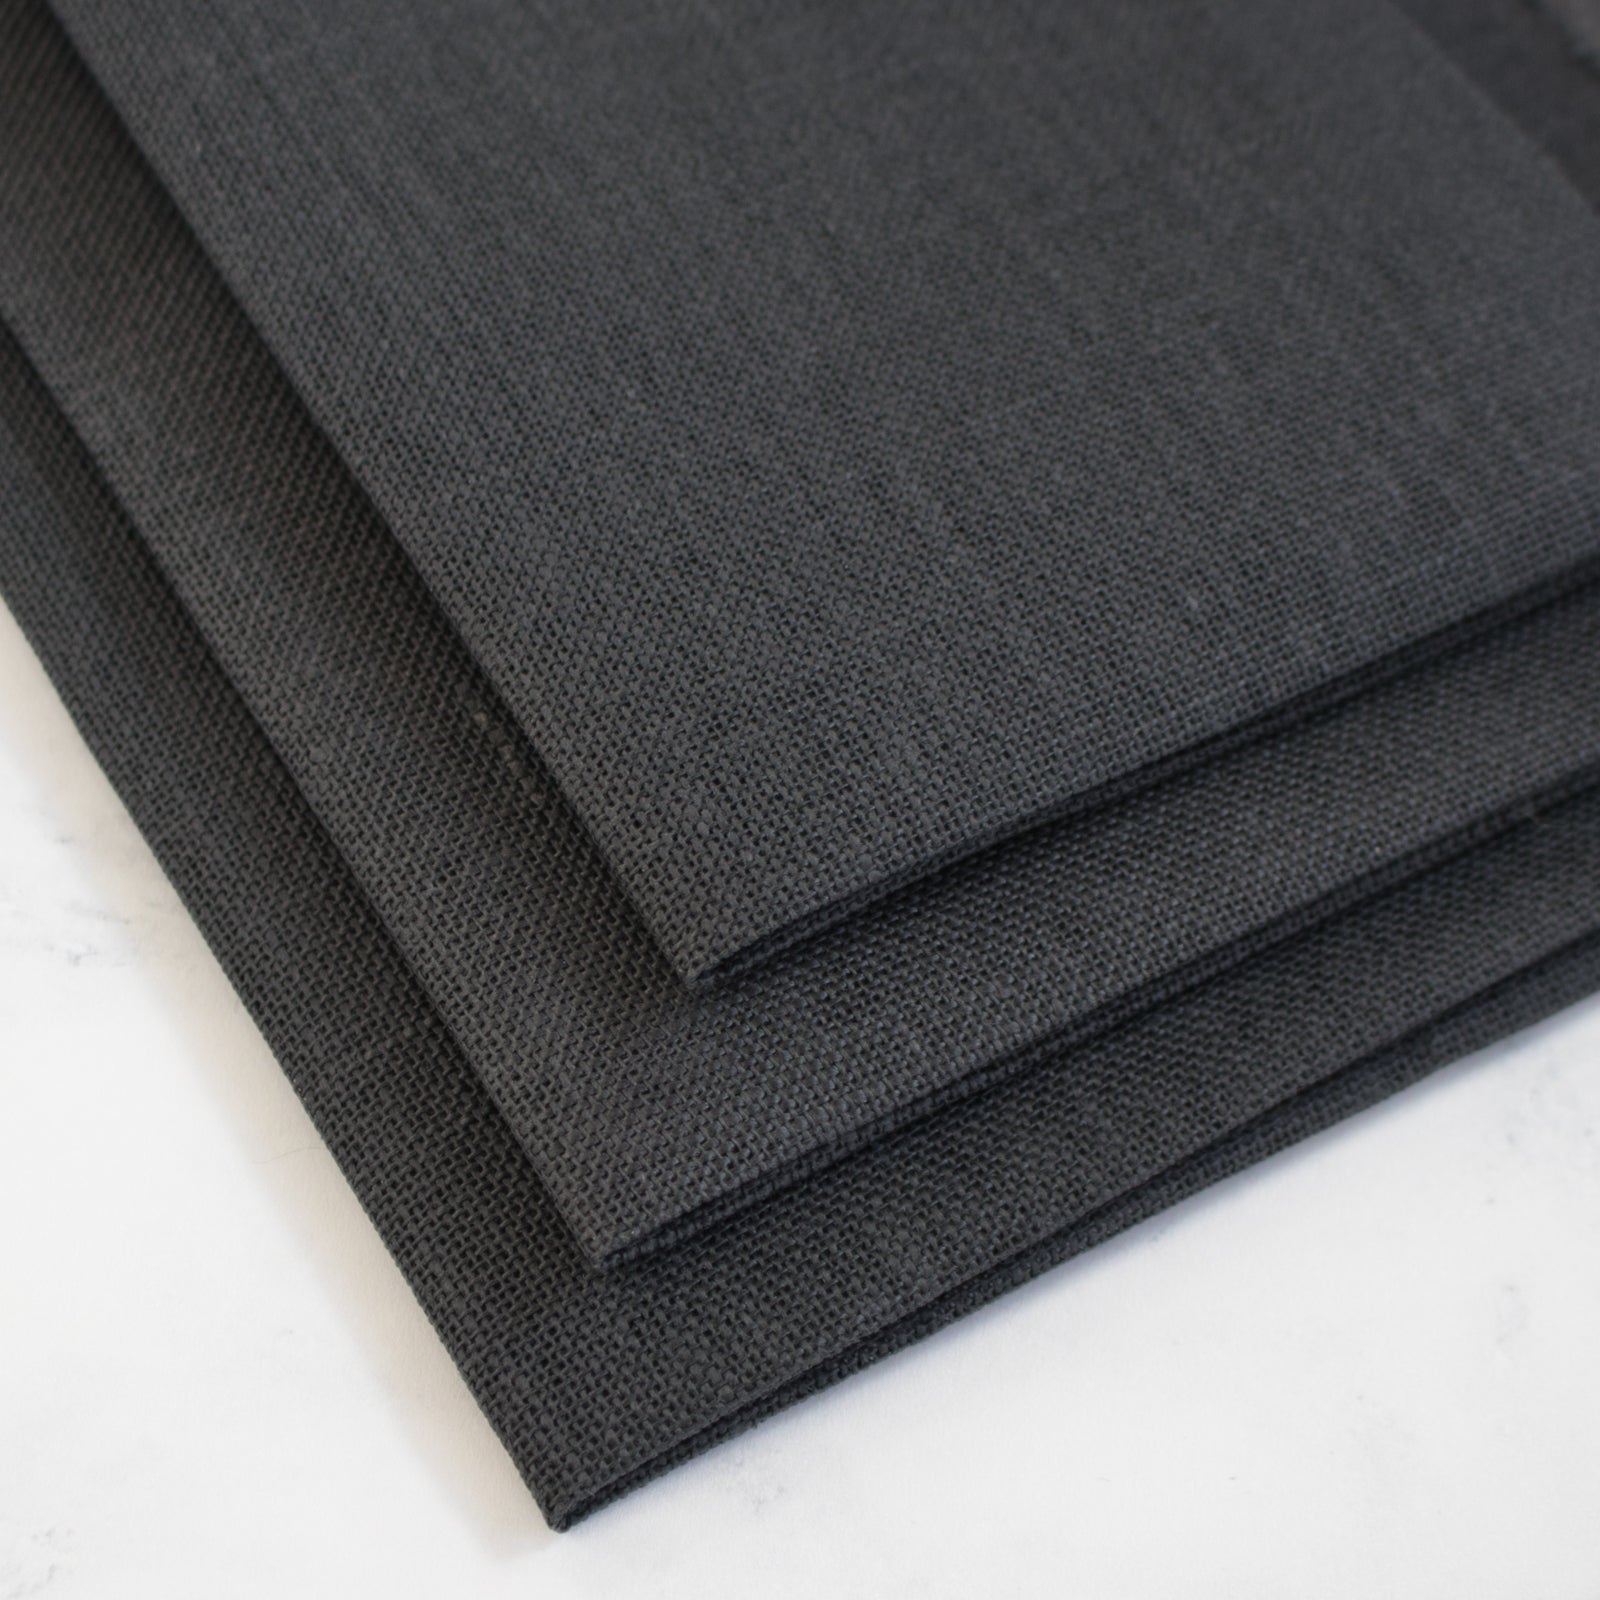 Wichelt Permin 100% Linen Chalkboard Black 32 ct 18 x 27 Cross Stitch Fabric